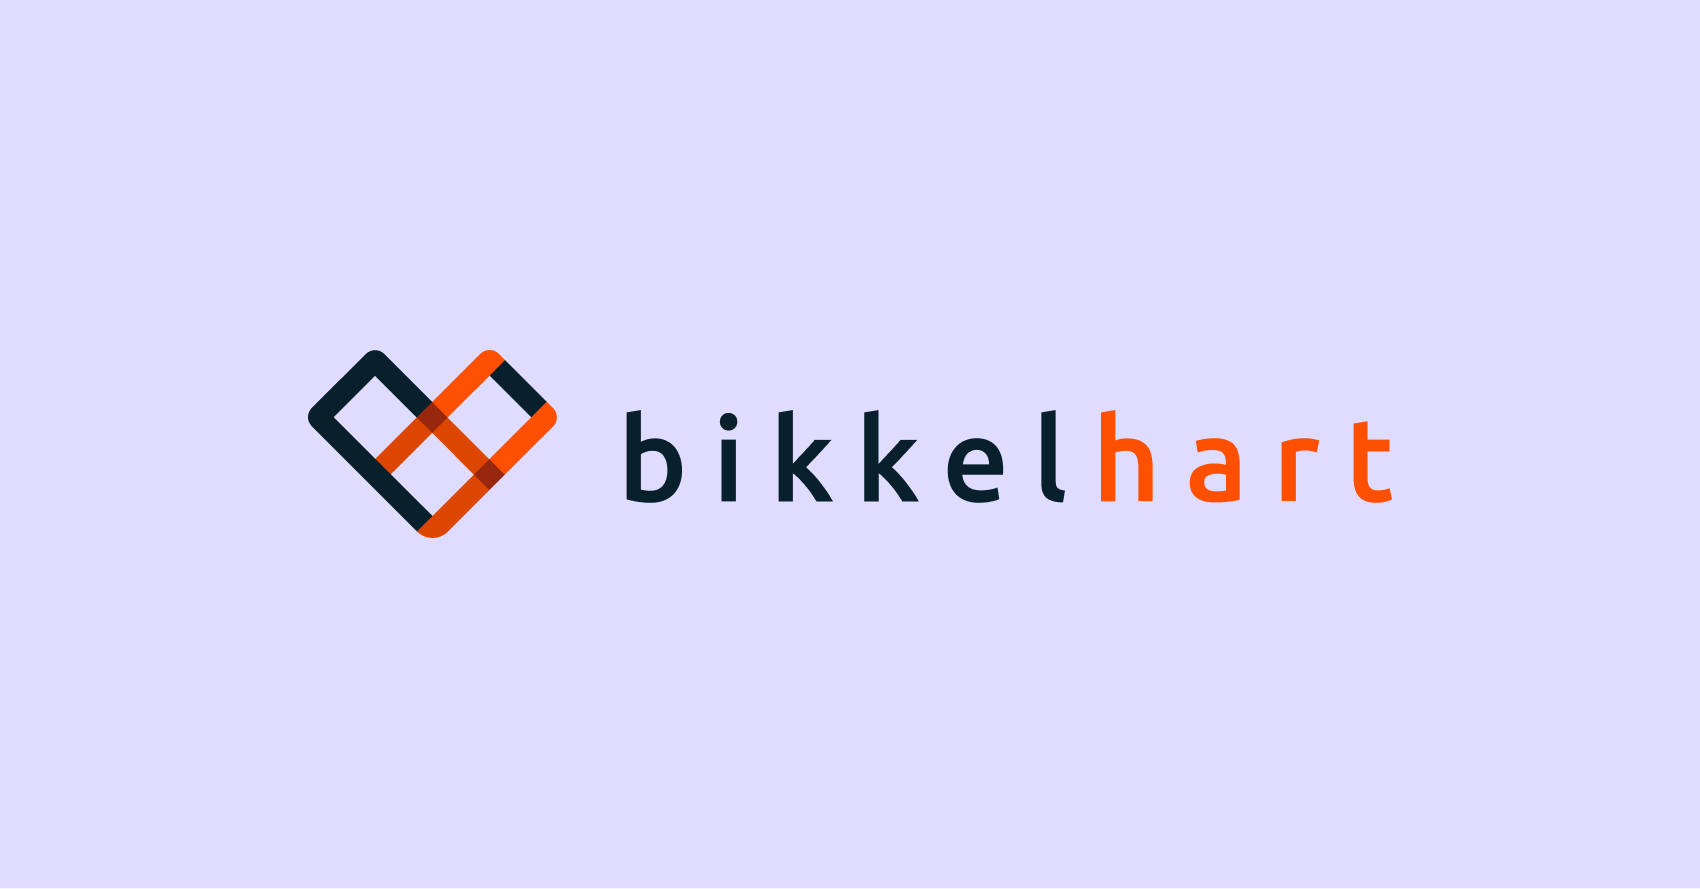 Agency Bikkelhart logo with background